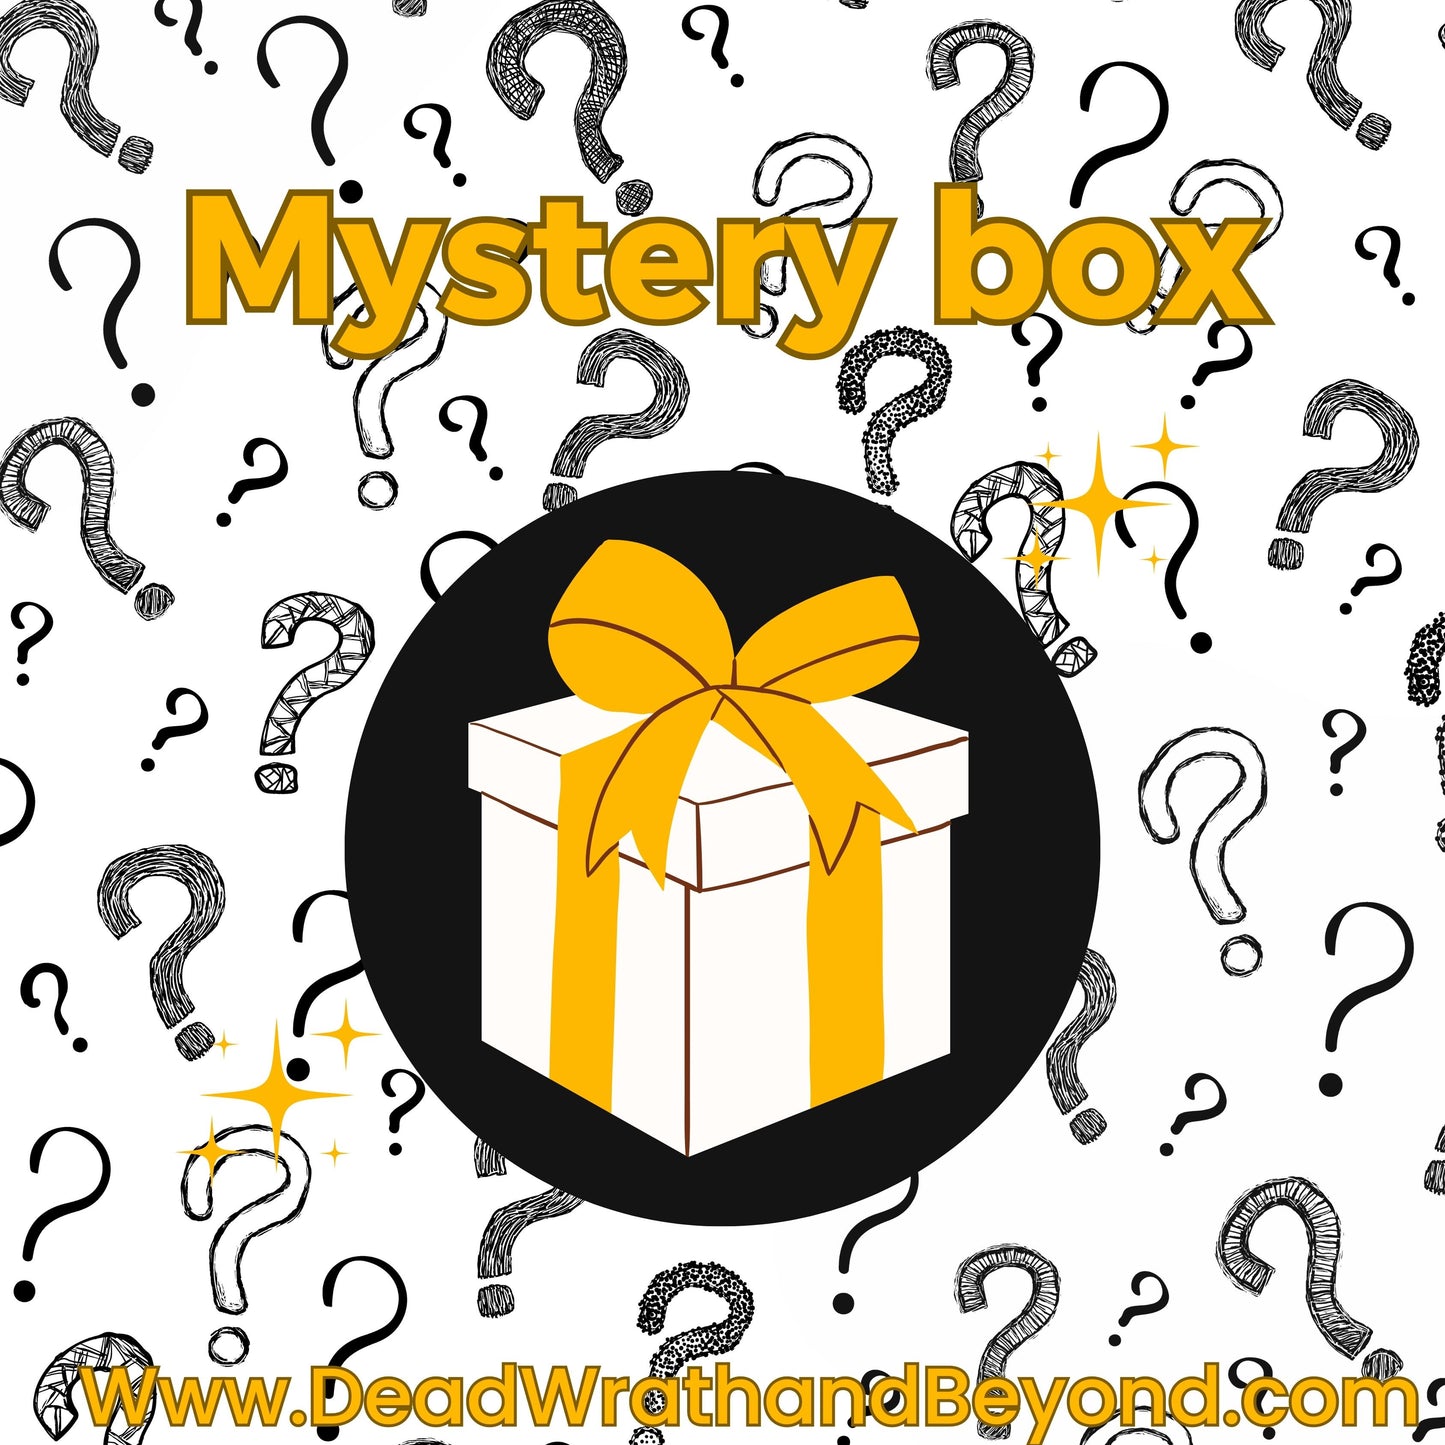 Prototype dagger mystery box